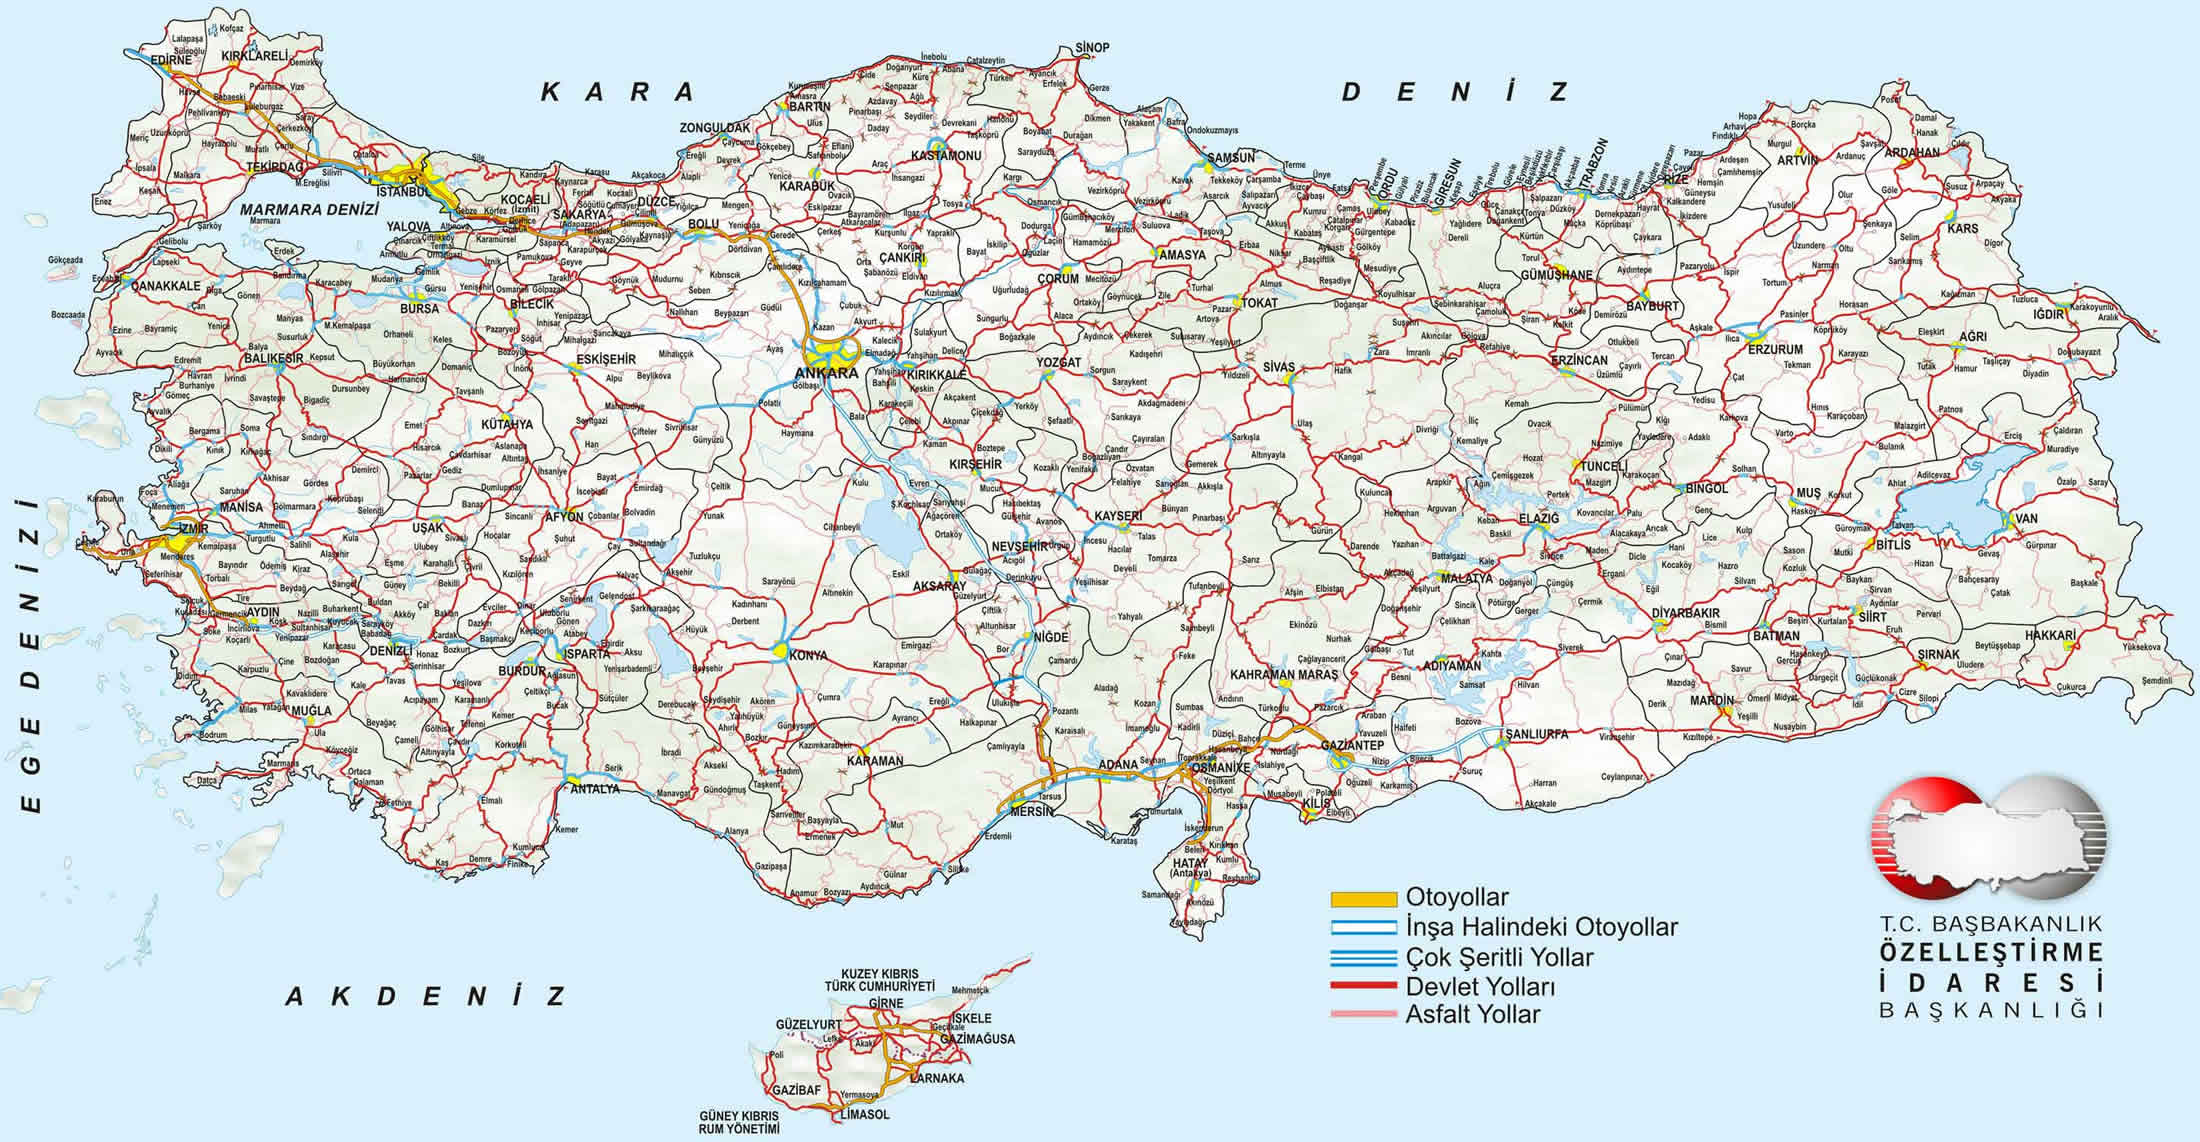 detayli turkiye haritasi